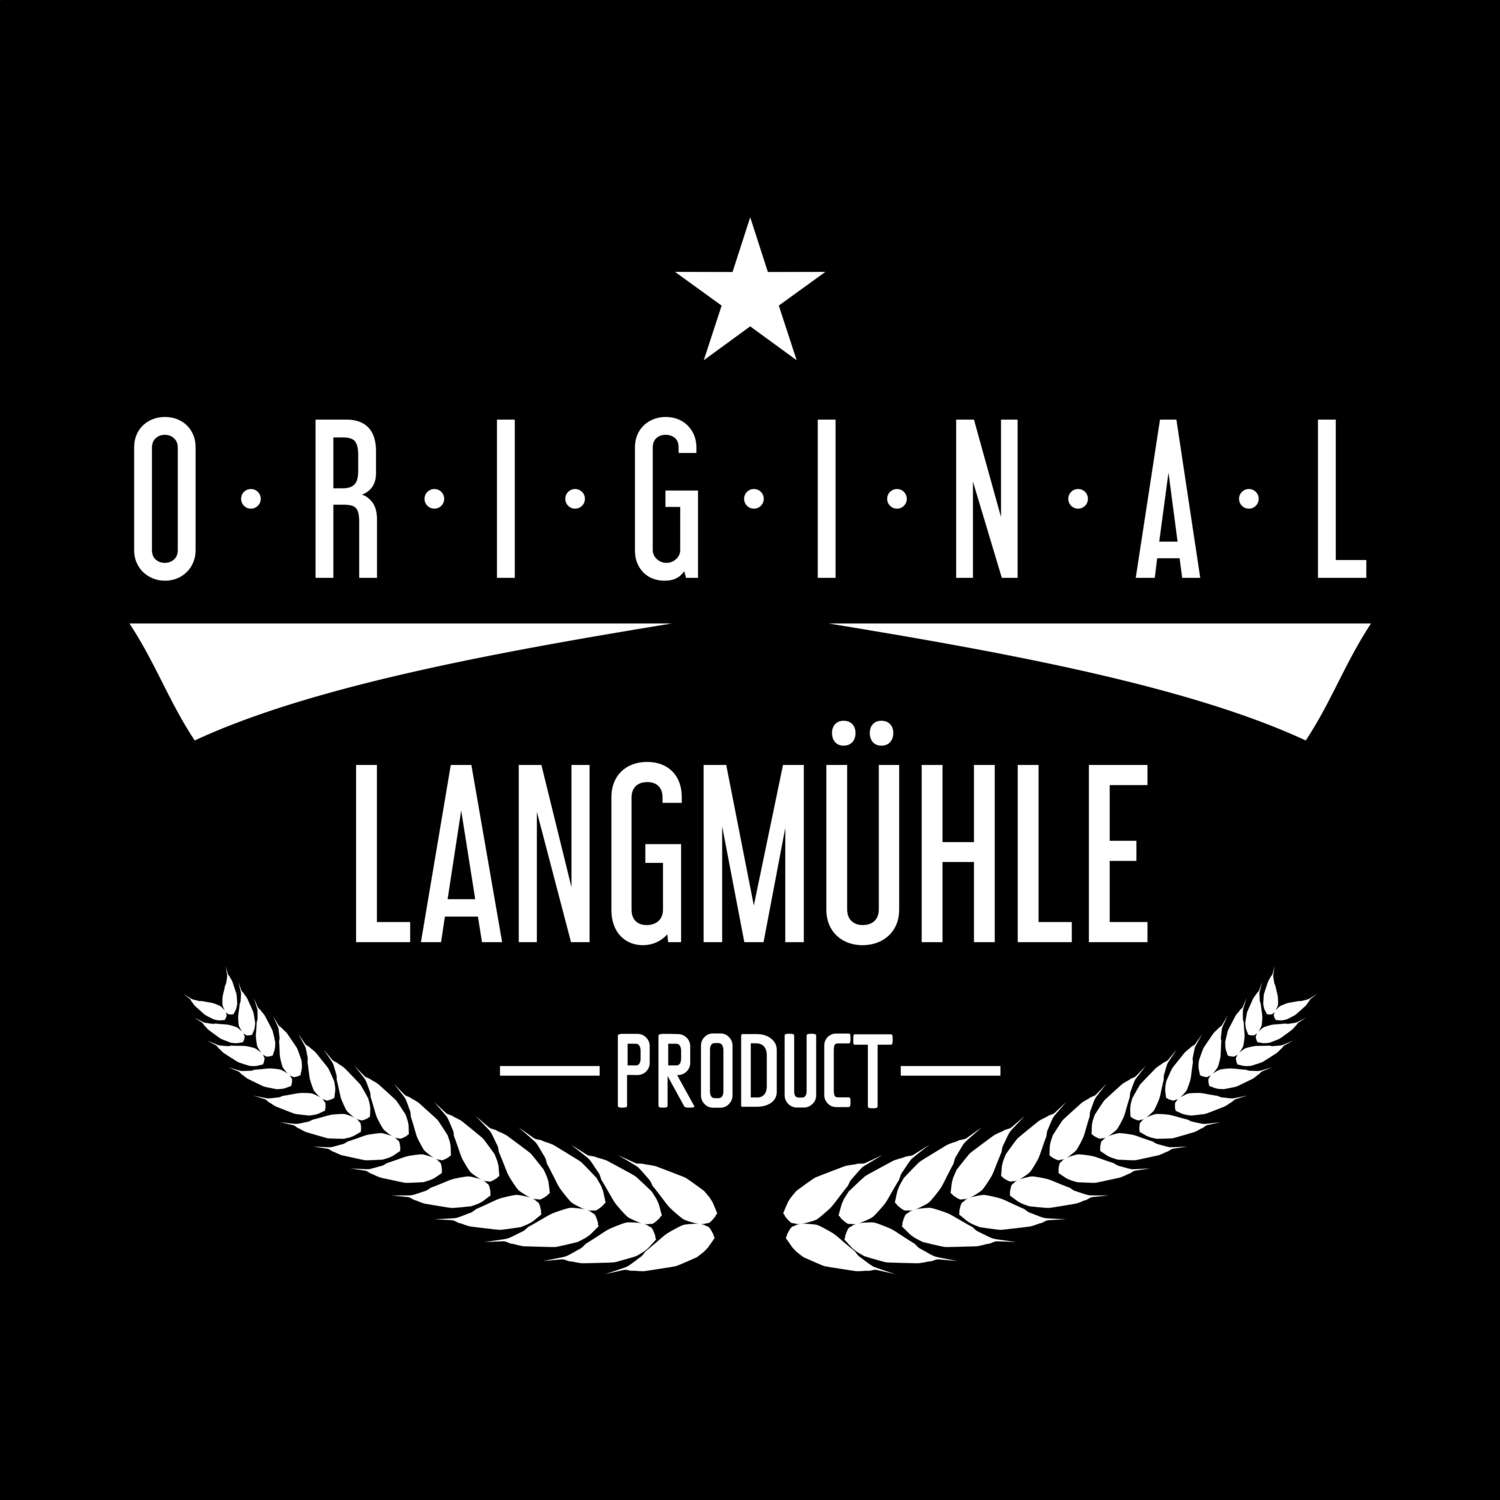 Langmühle T-Shirt »Original Product«